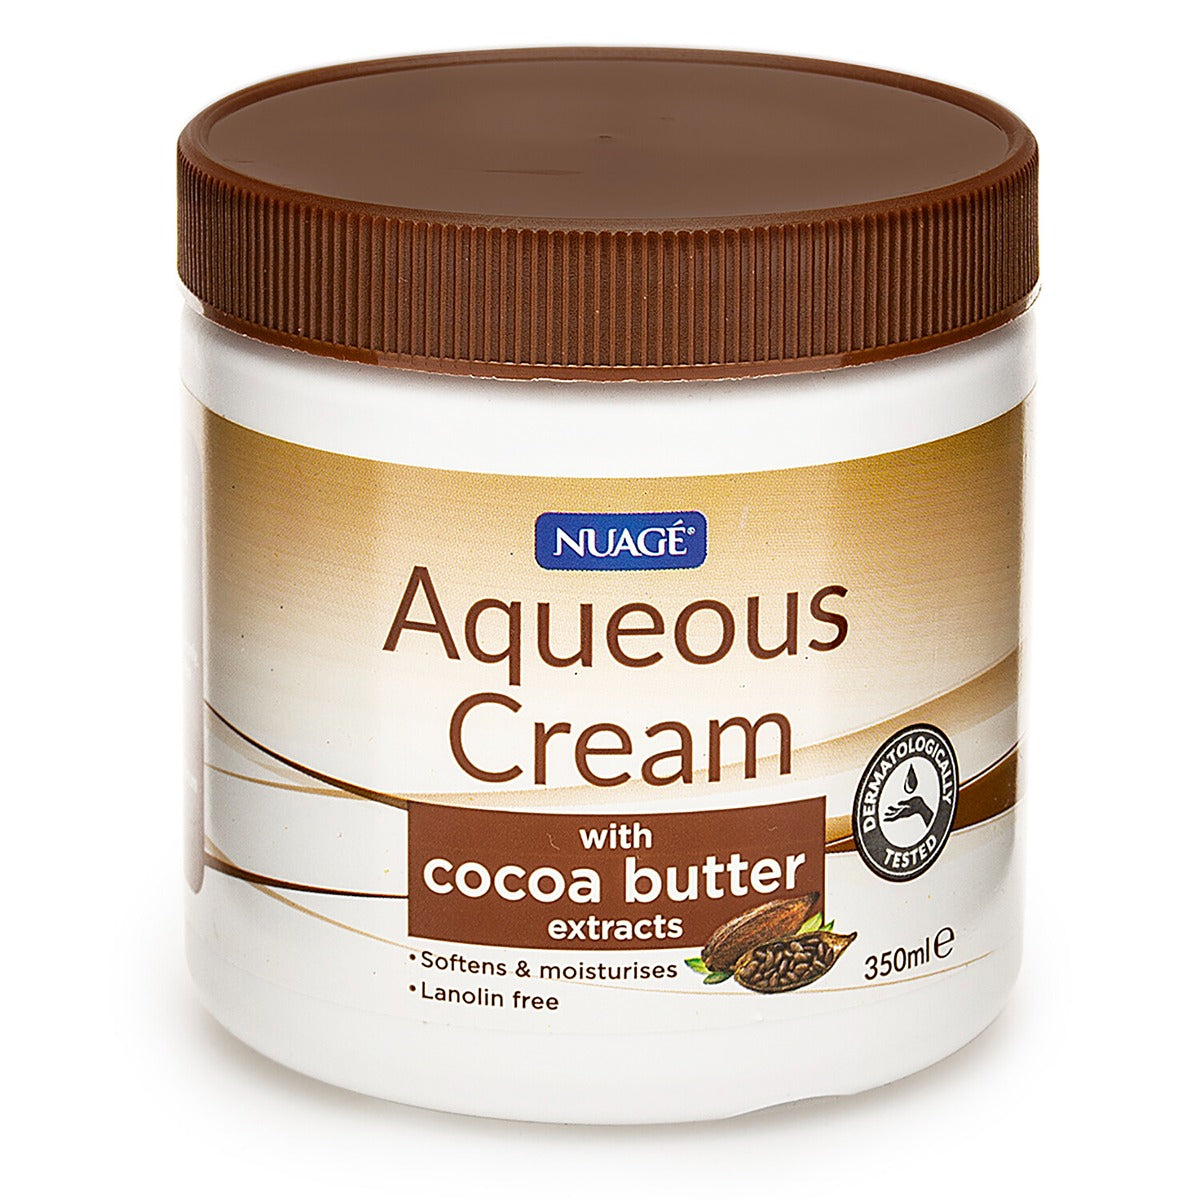 Nuage Aqueous - Cream Cocoa Butter Moisturise Cleanse Fragrance Lanolin Free - 350ml - Continental Food Store